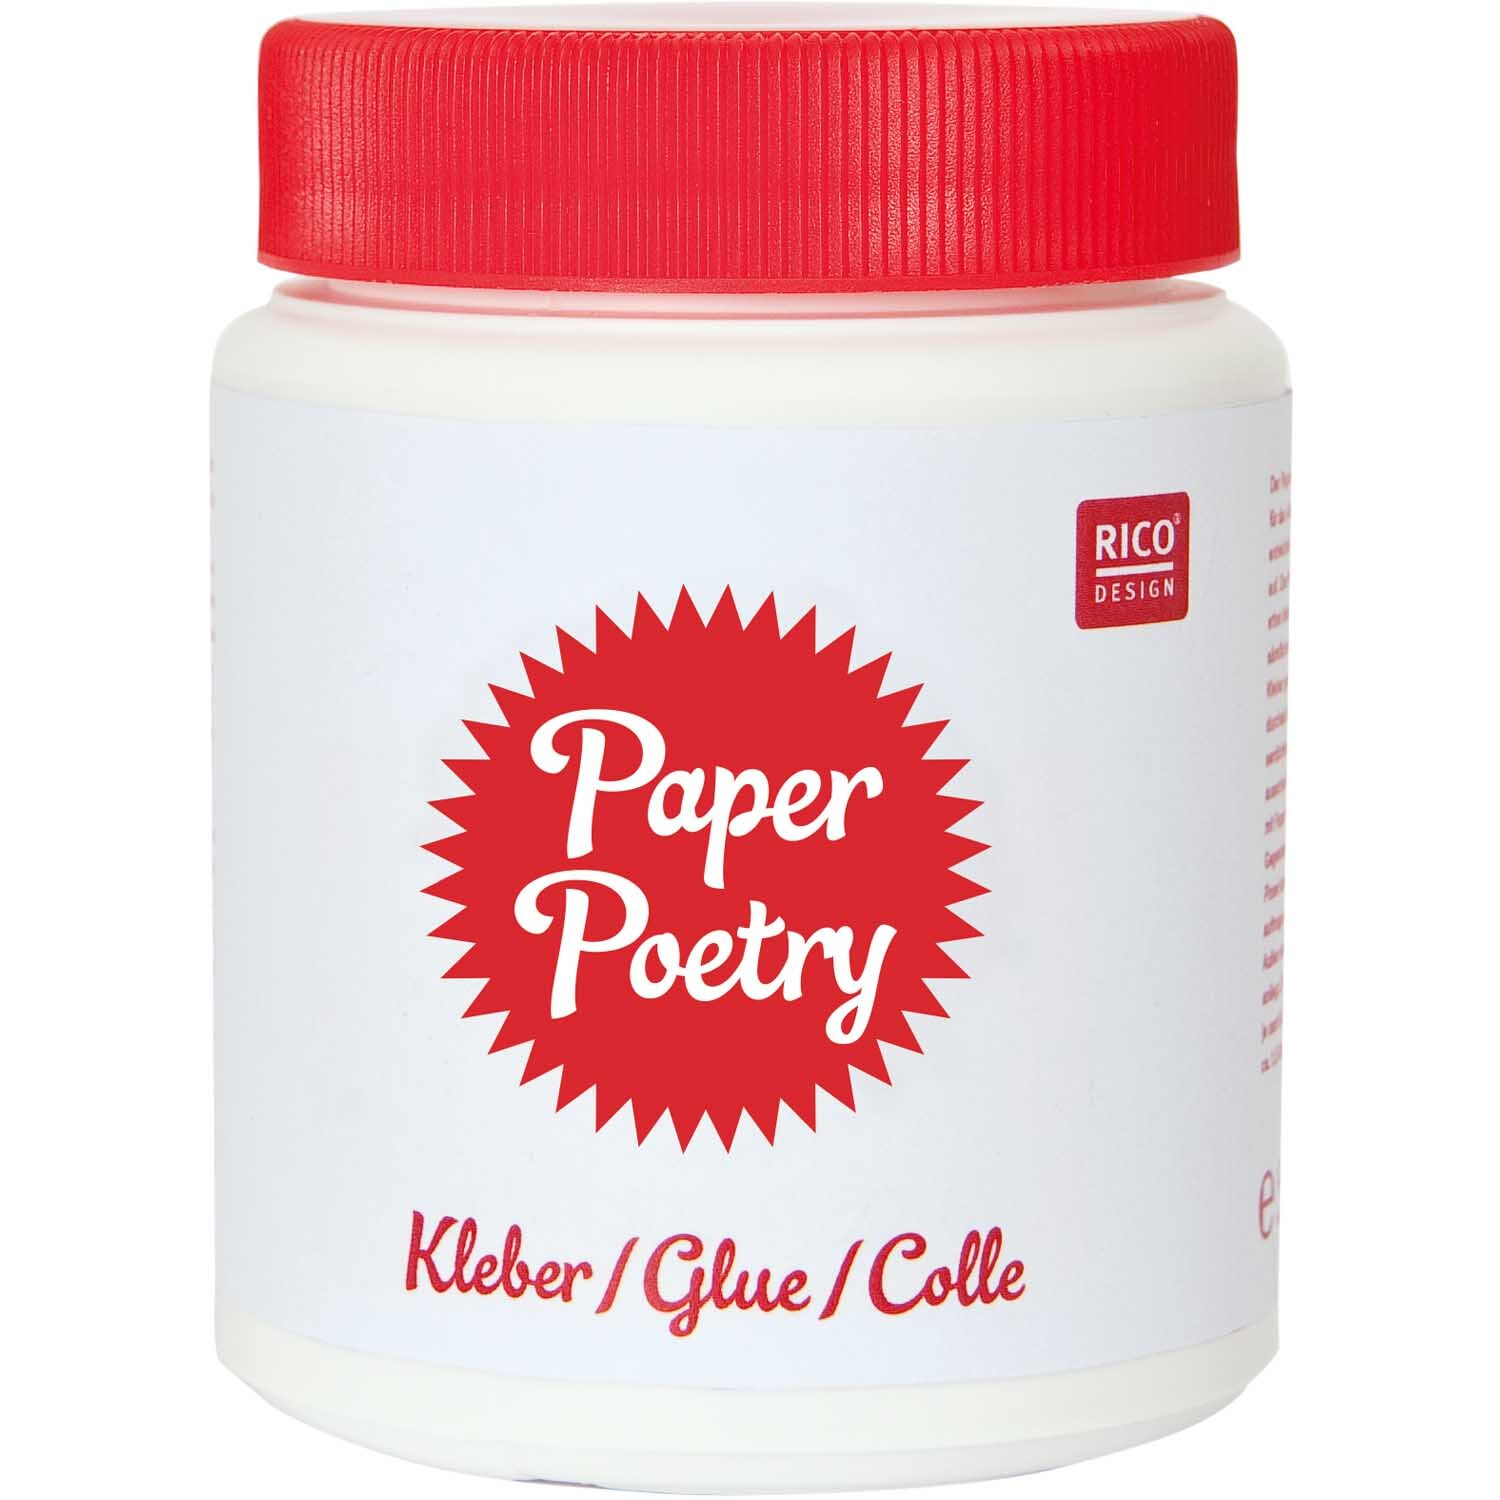 Paper Poetry Kleber